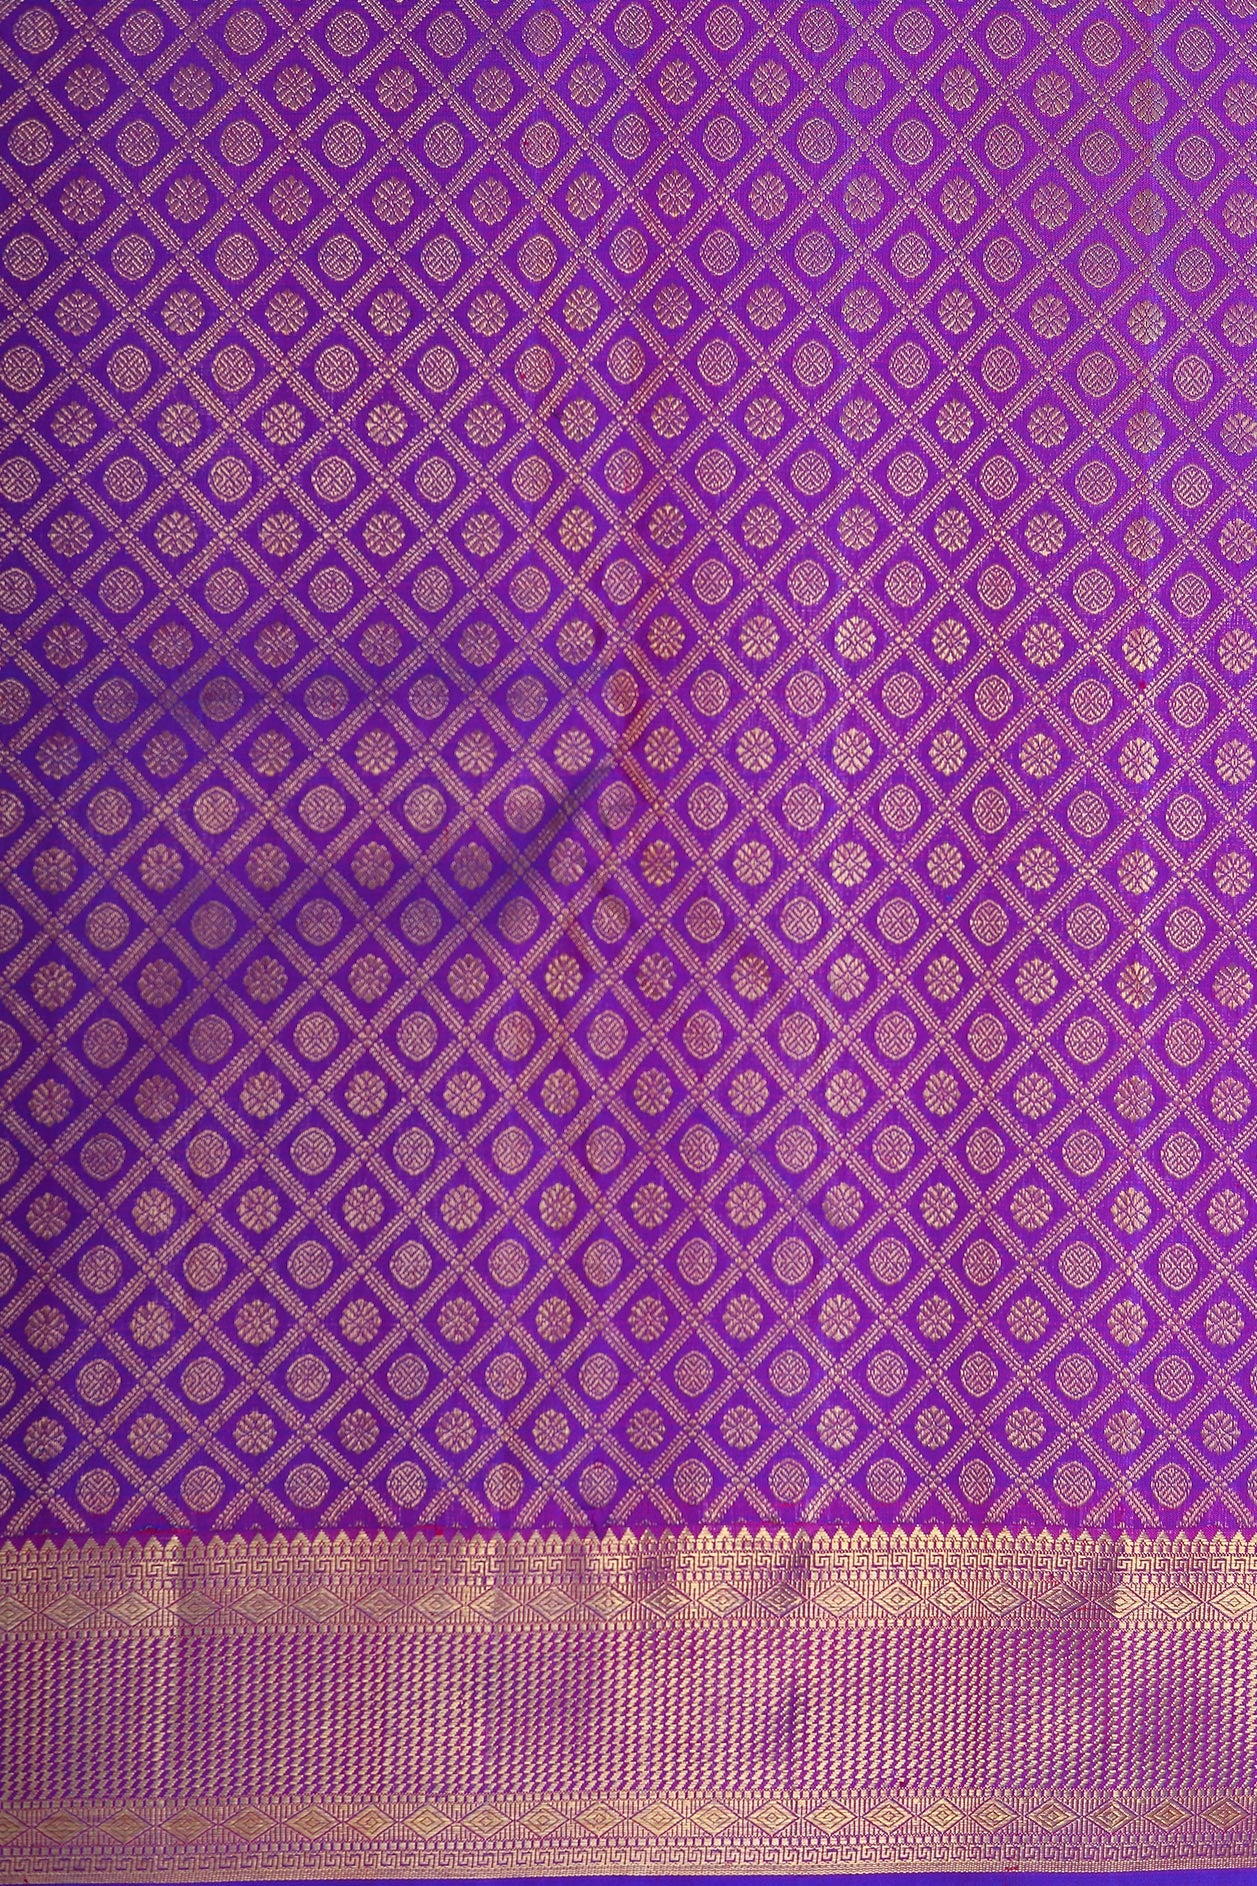 Korvai Border In Brocade Violet Kanchipuram Silk Saree